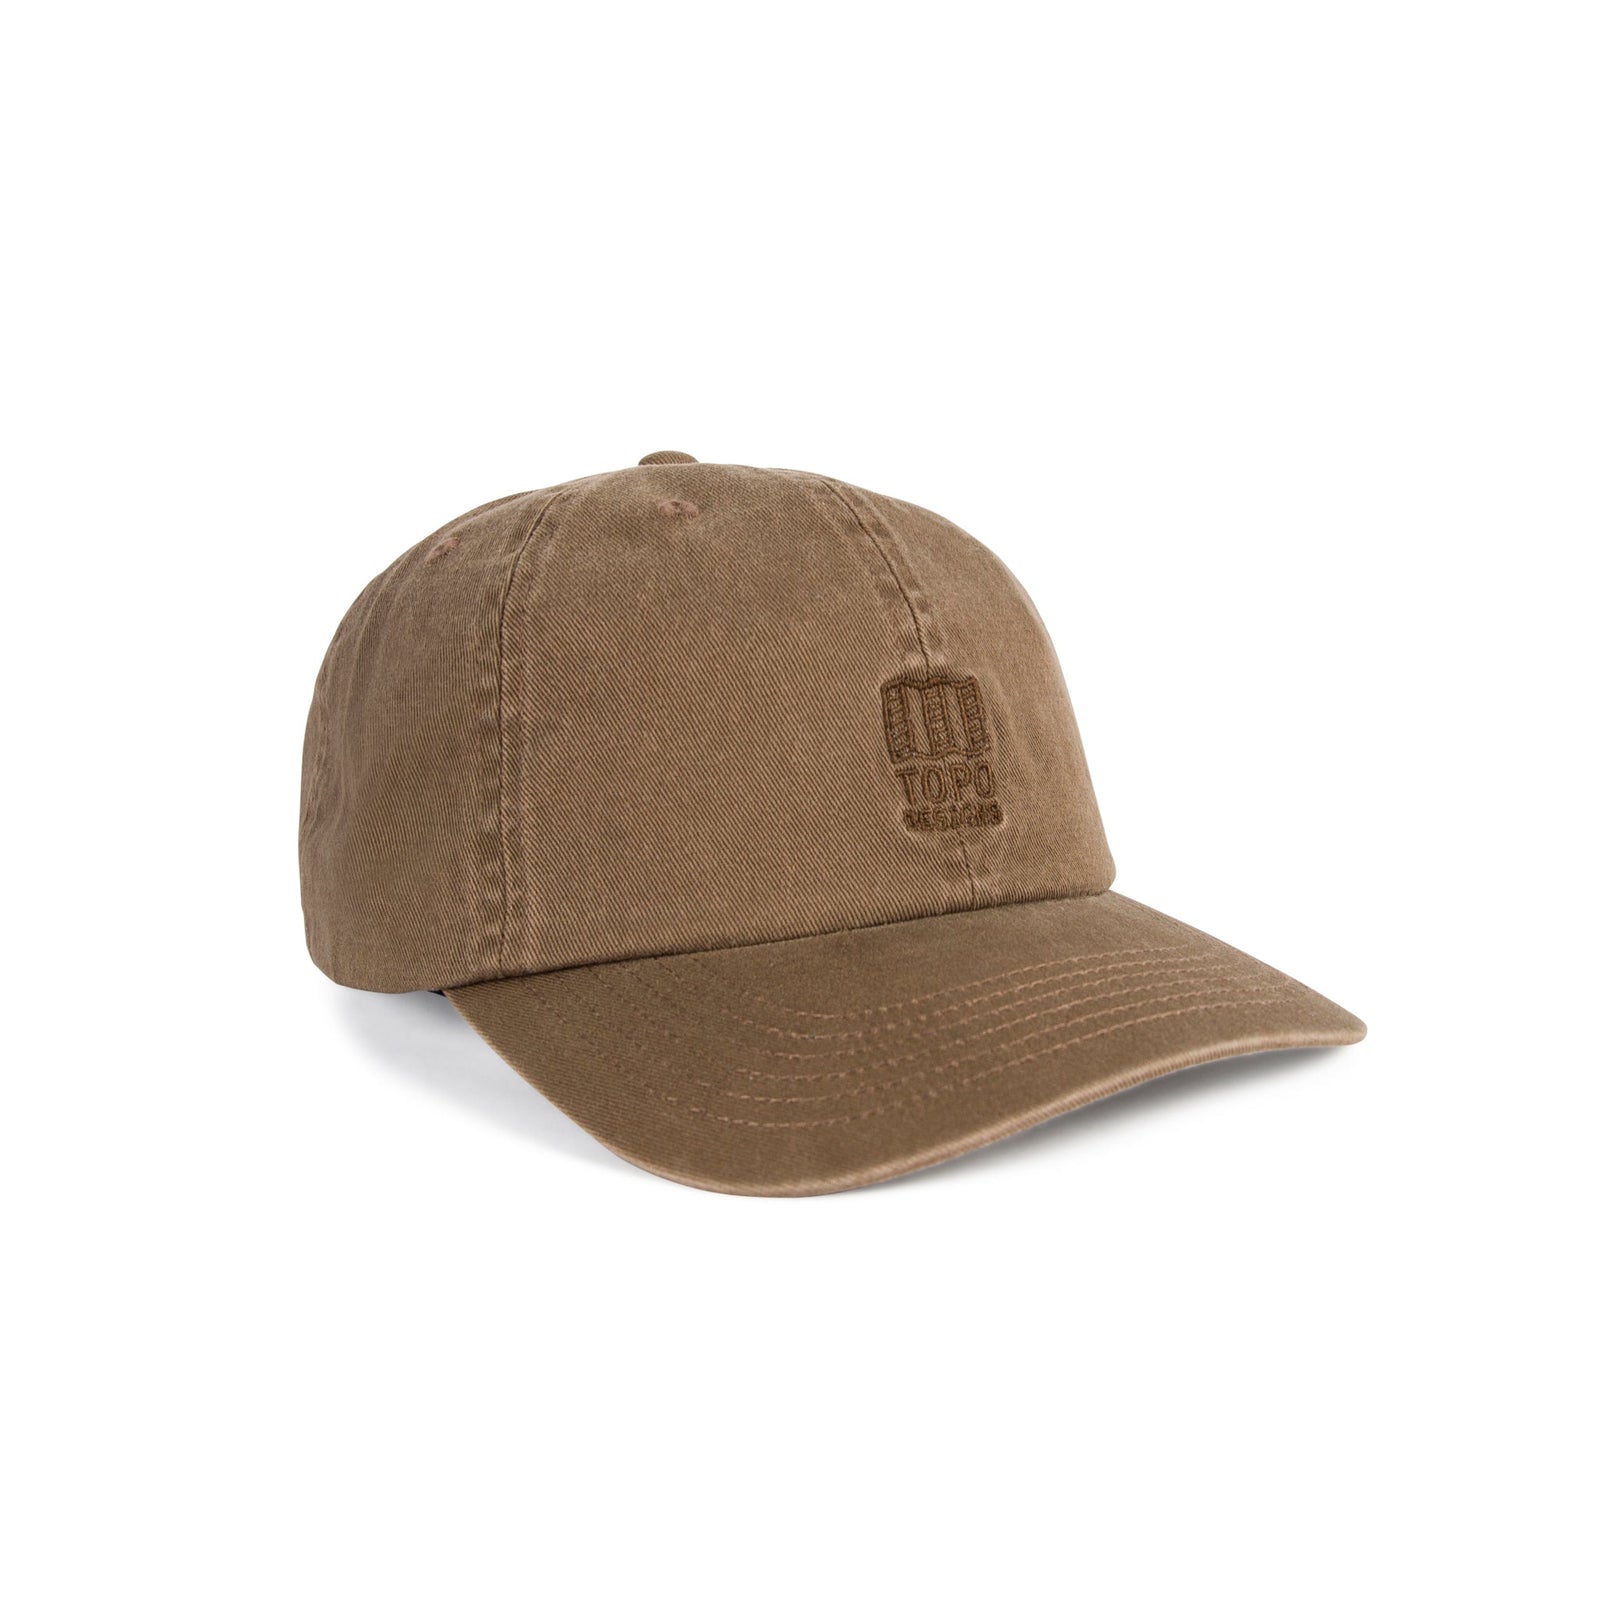 Topo Designs Mountain Ball Cap cotton logo hat in "Dark Khaki" brown.